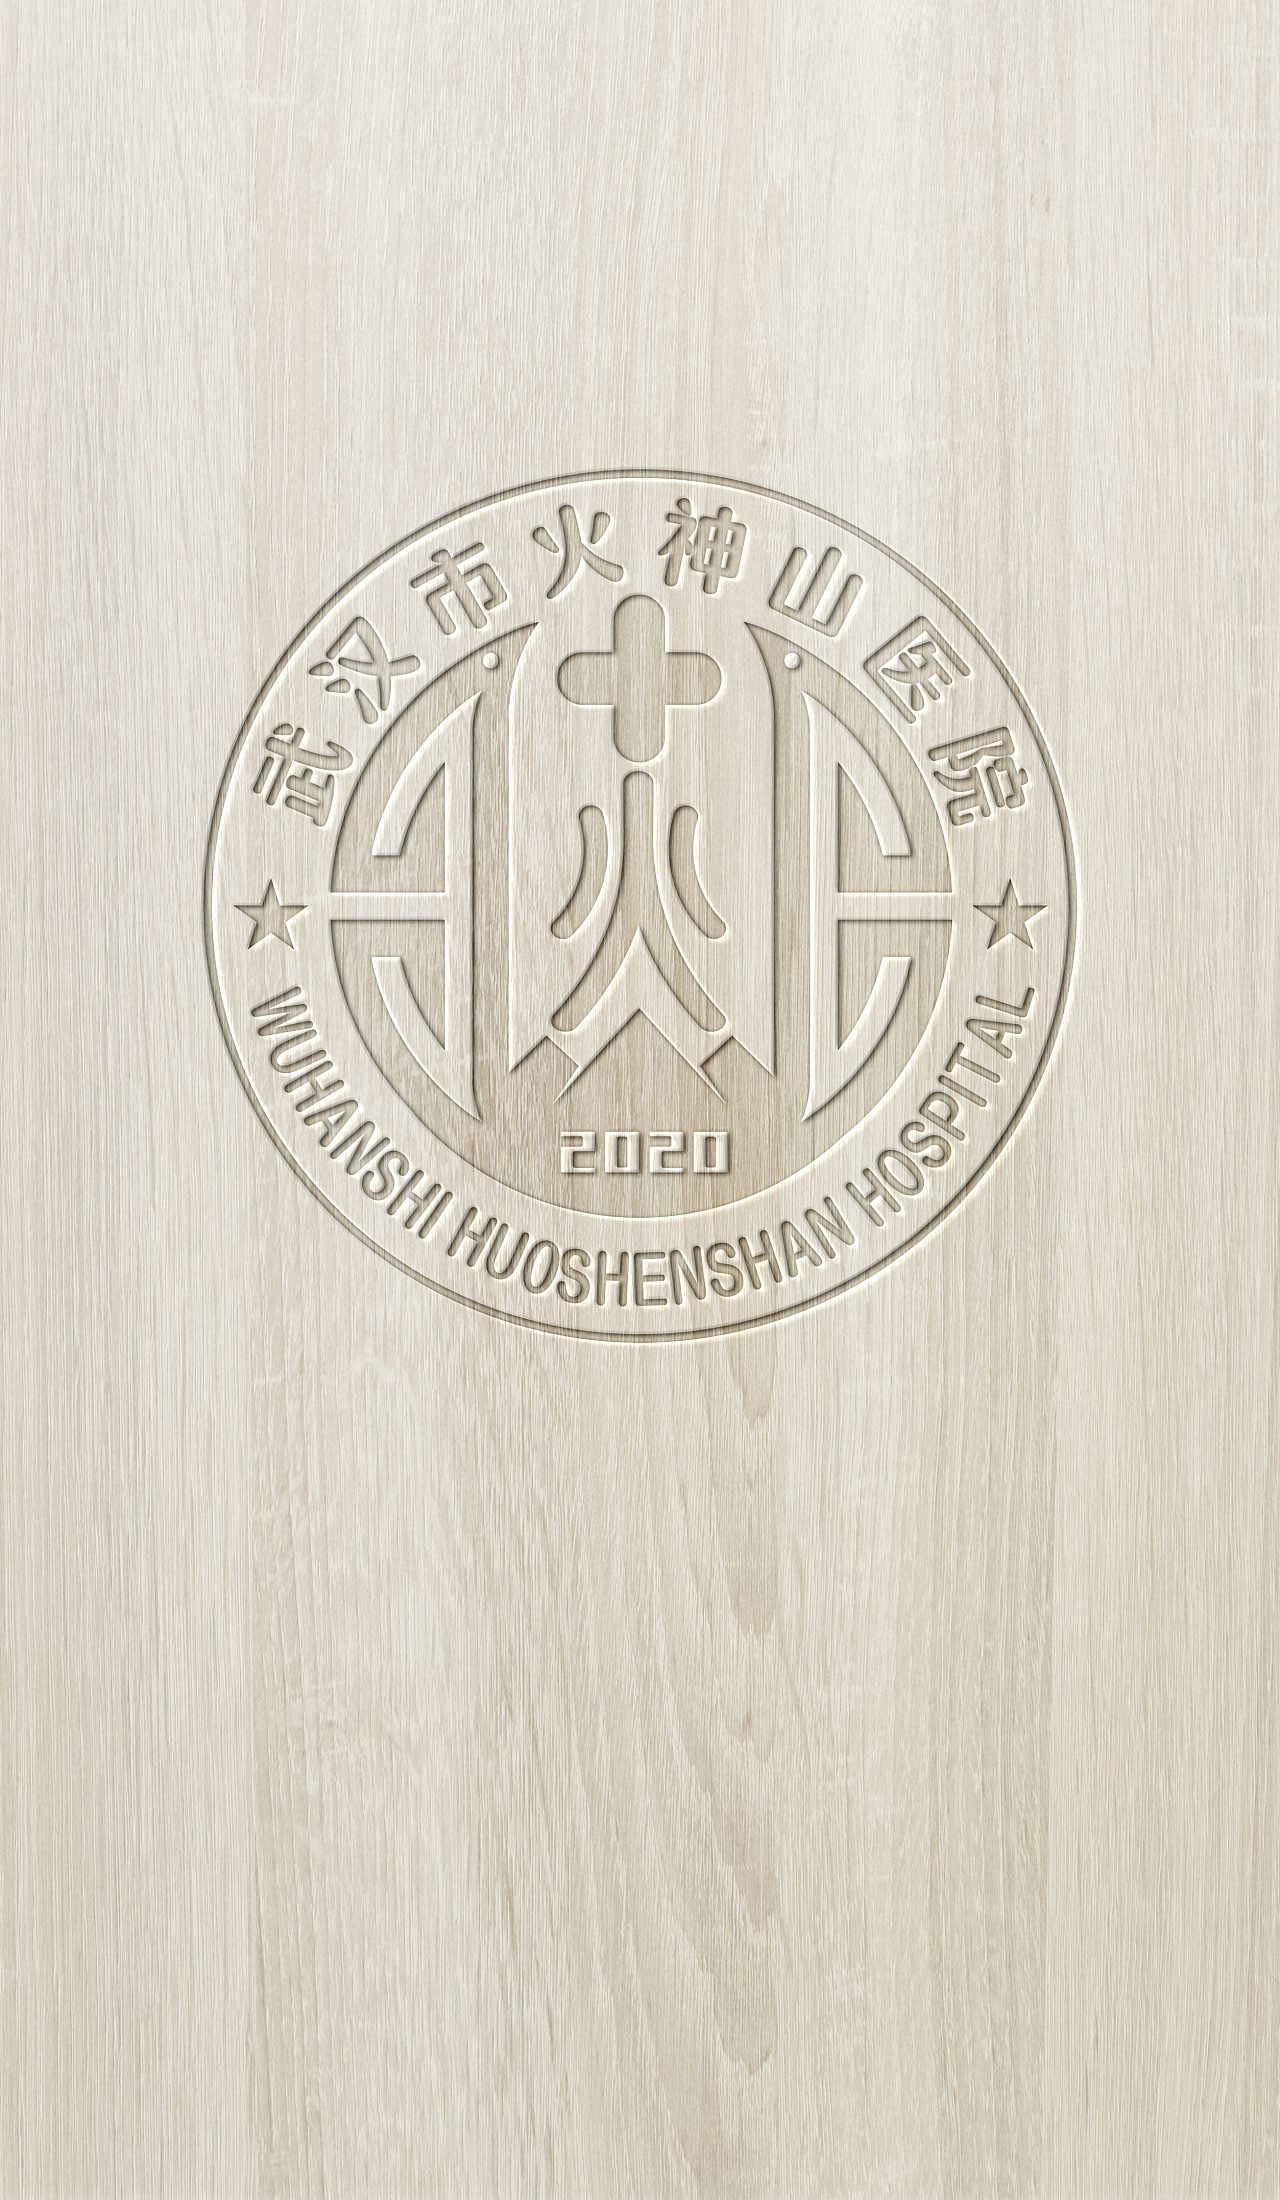 火神山logo图片